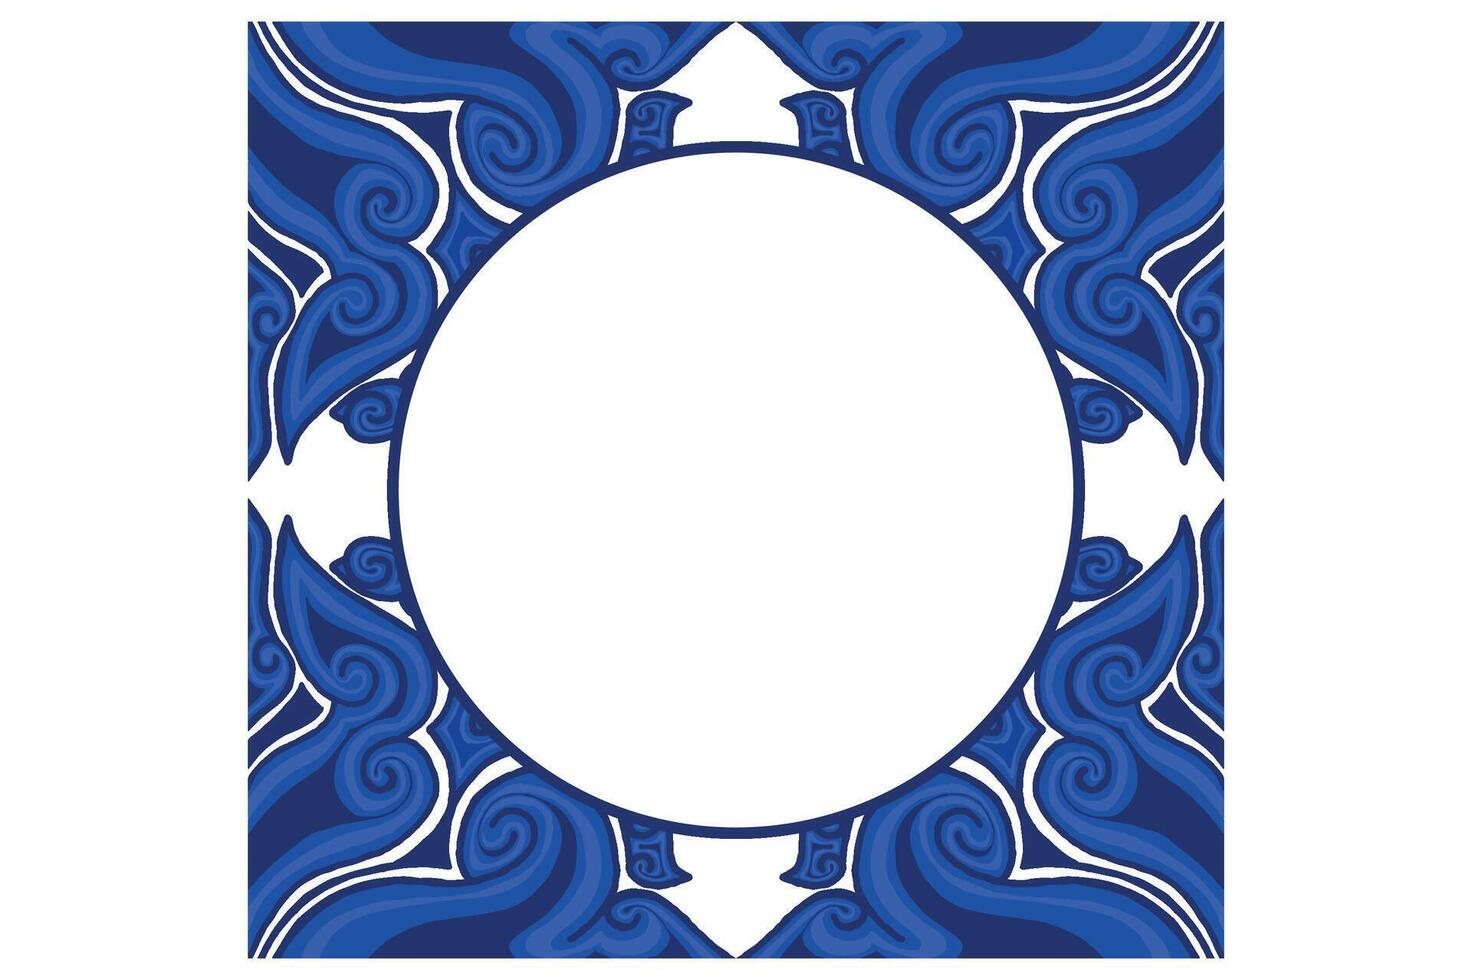 Blau Ornament Rahmen Rand Vektor Design zum dekorativ Element